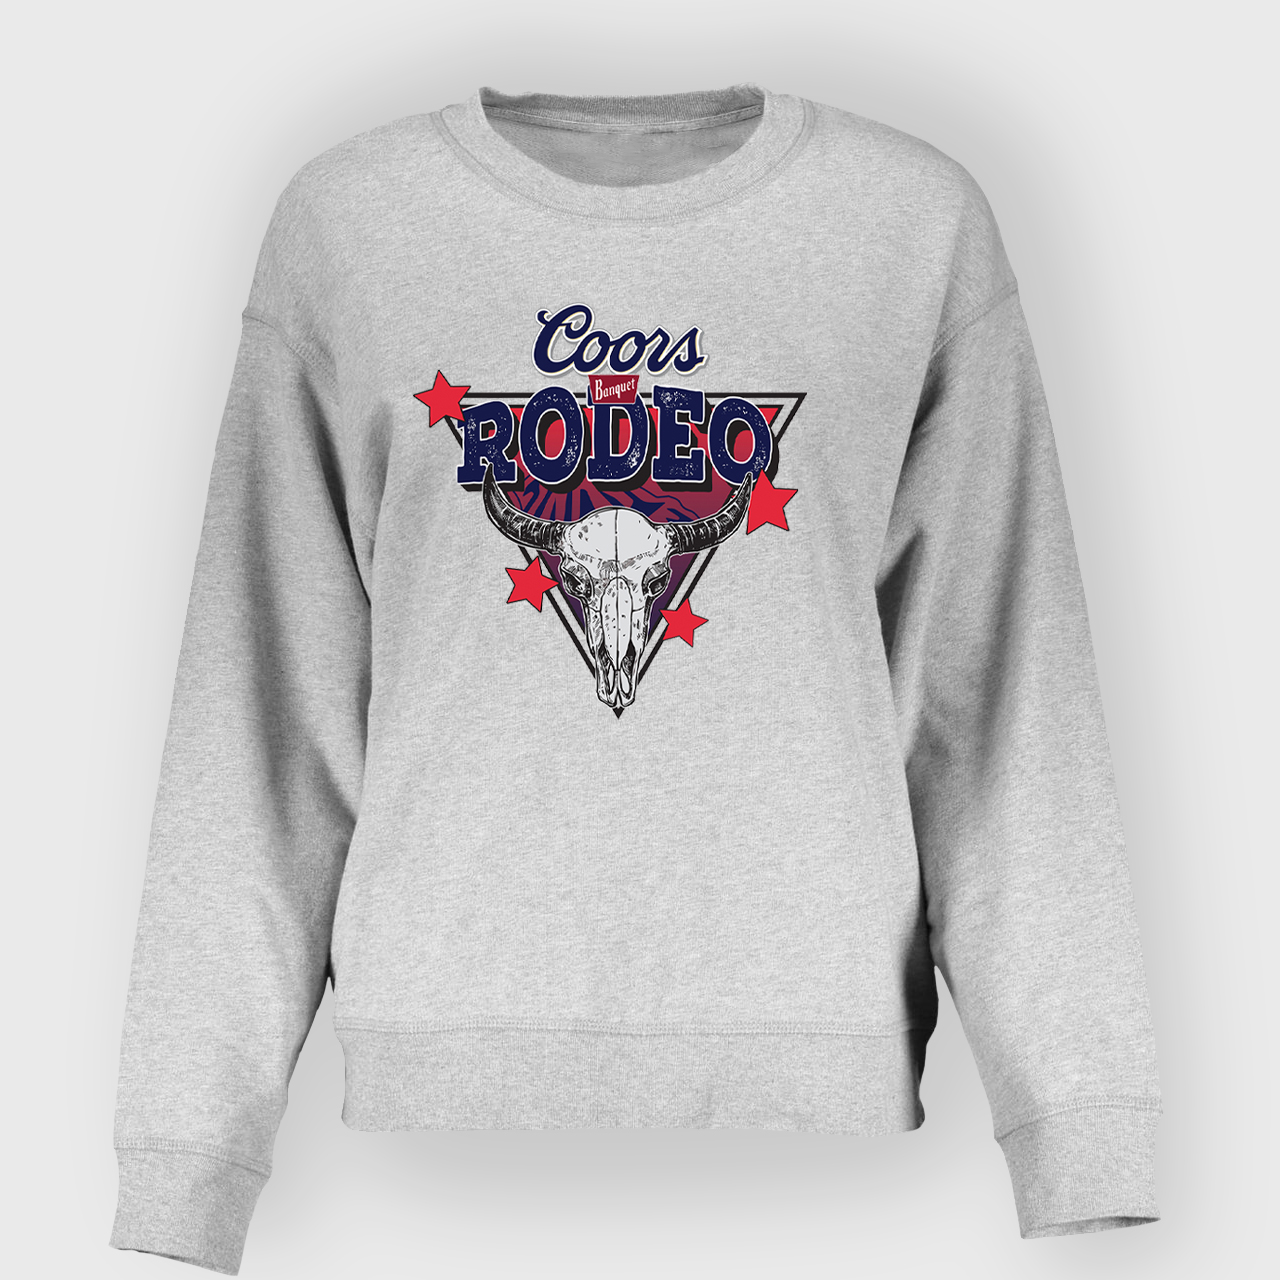 Coors Rodeo Cowboy Sweatshirt